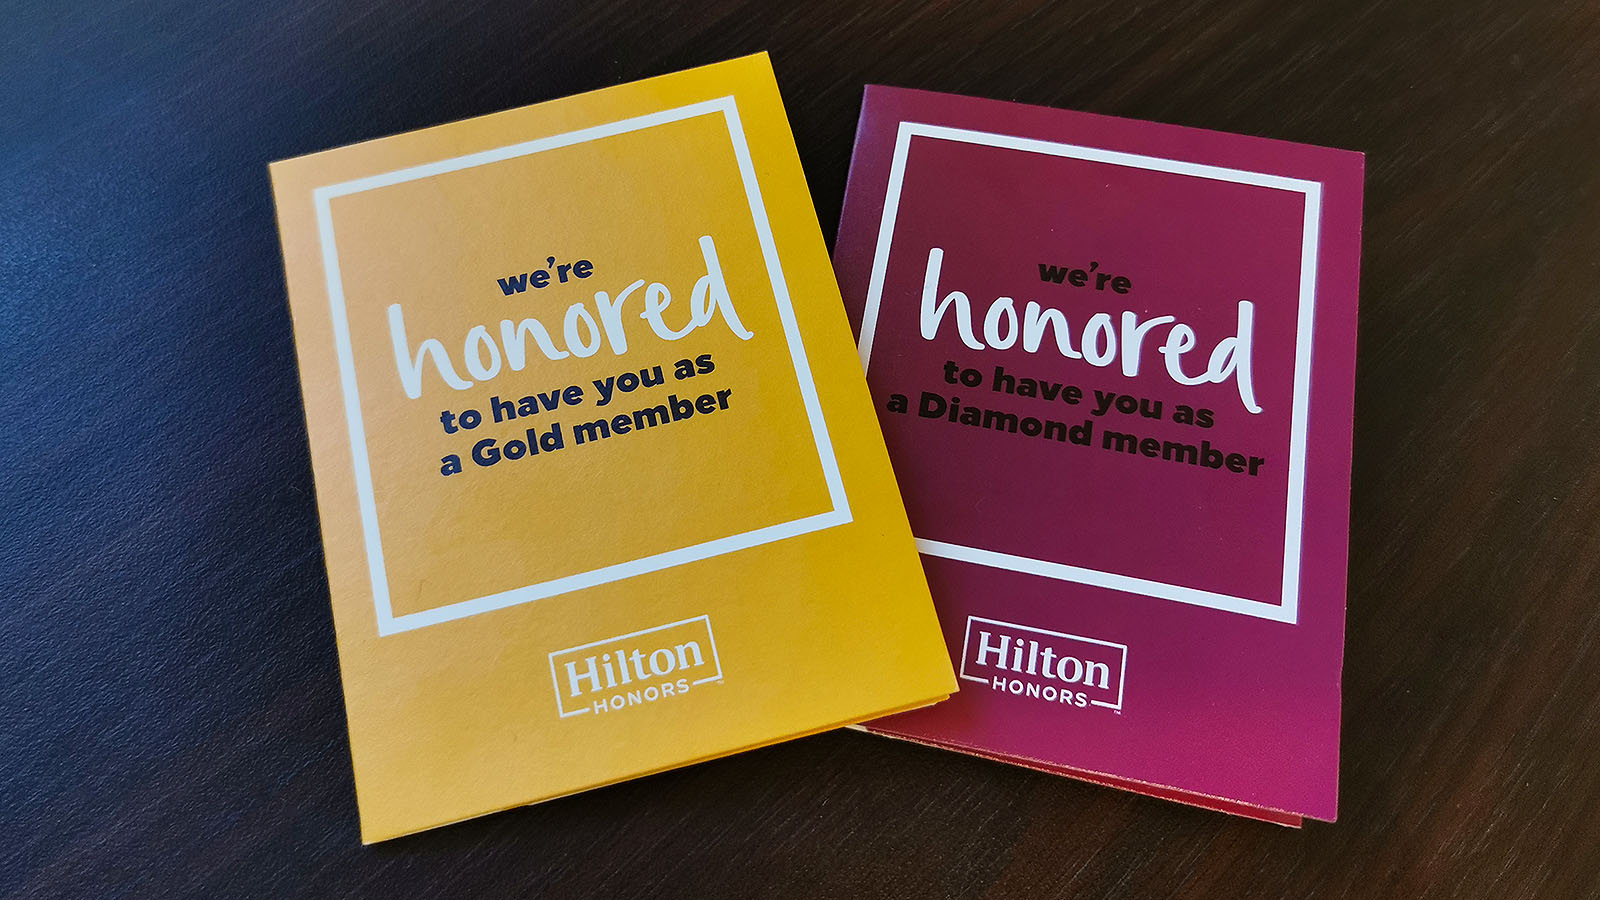 Hilton Honors room keys for access to the Hilton Singapore Orchard Executive Lounge